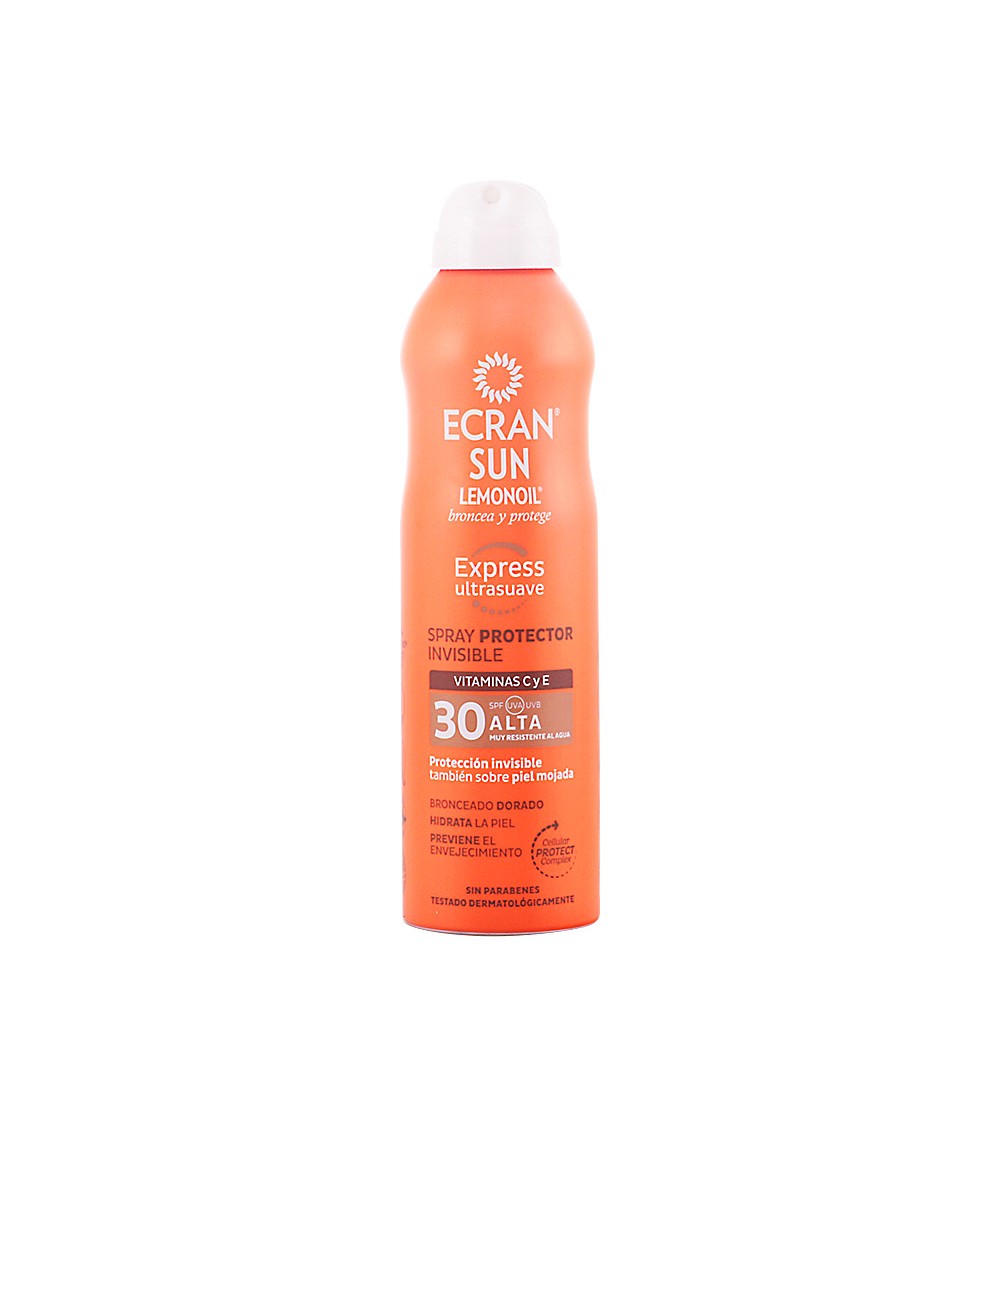 SUN LEMONOIL spray protector invisible SPF30 250 ml